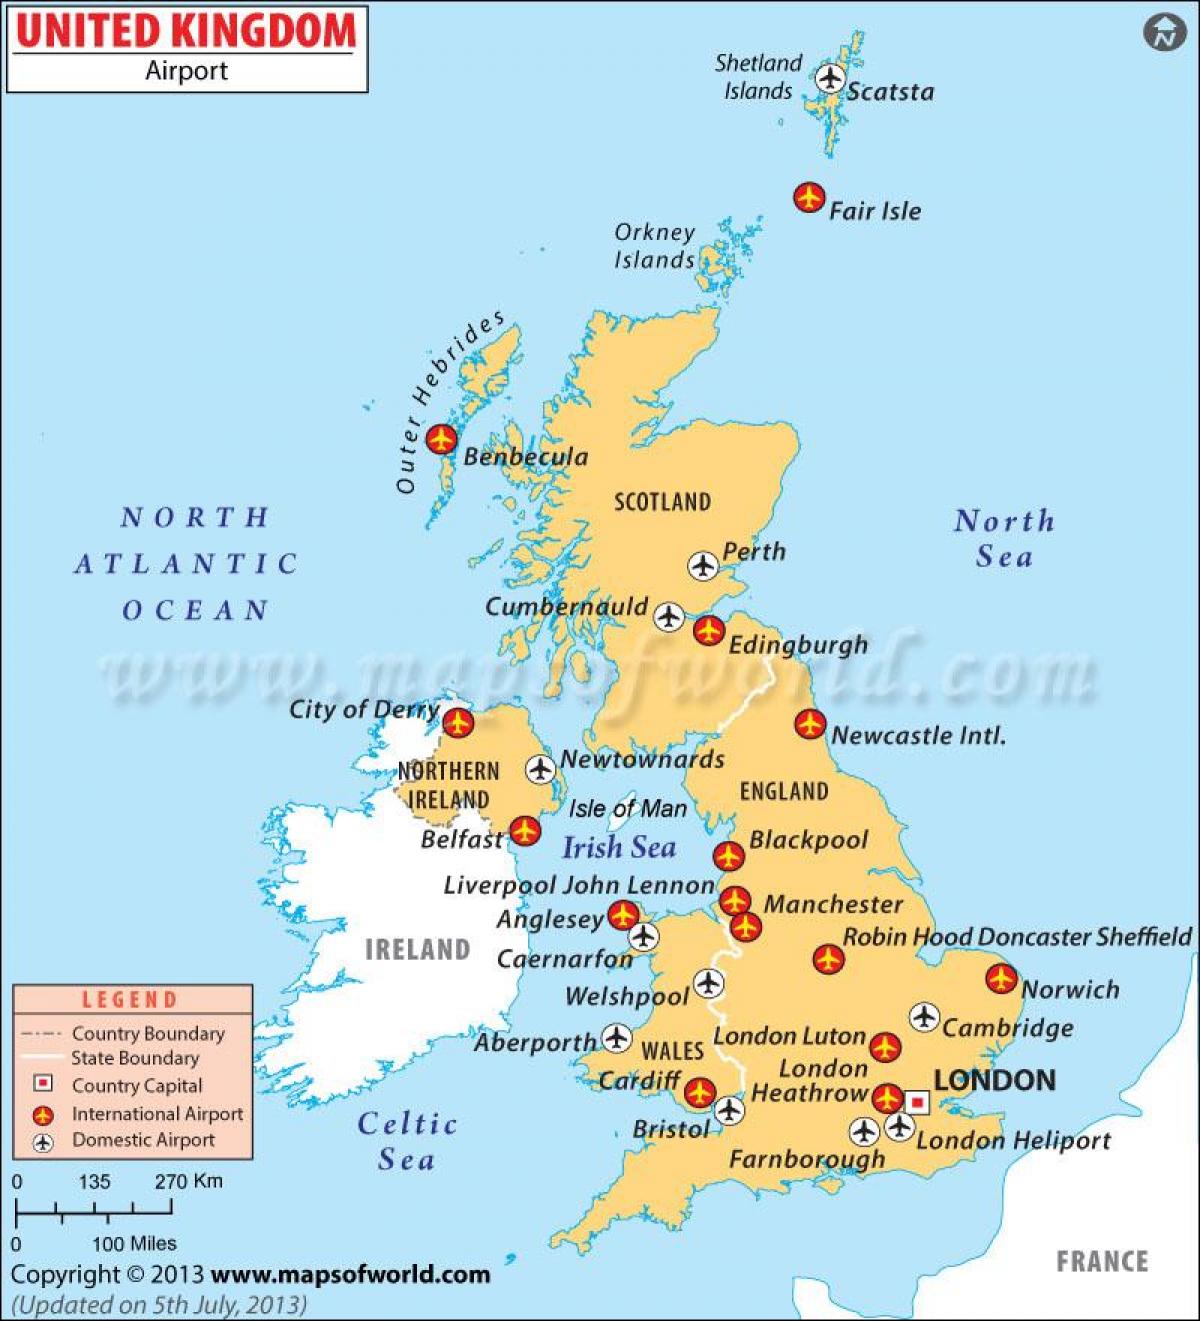 United Kingdom Airport Map 